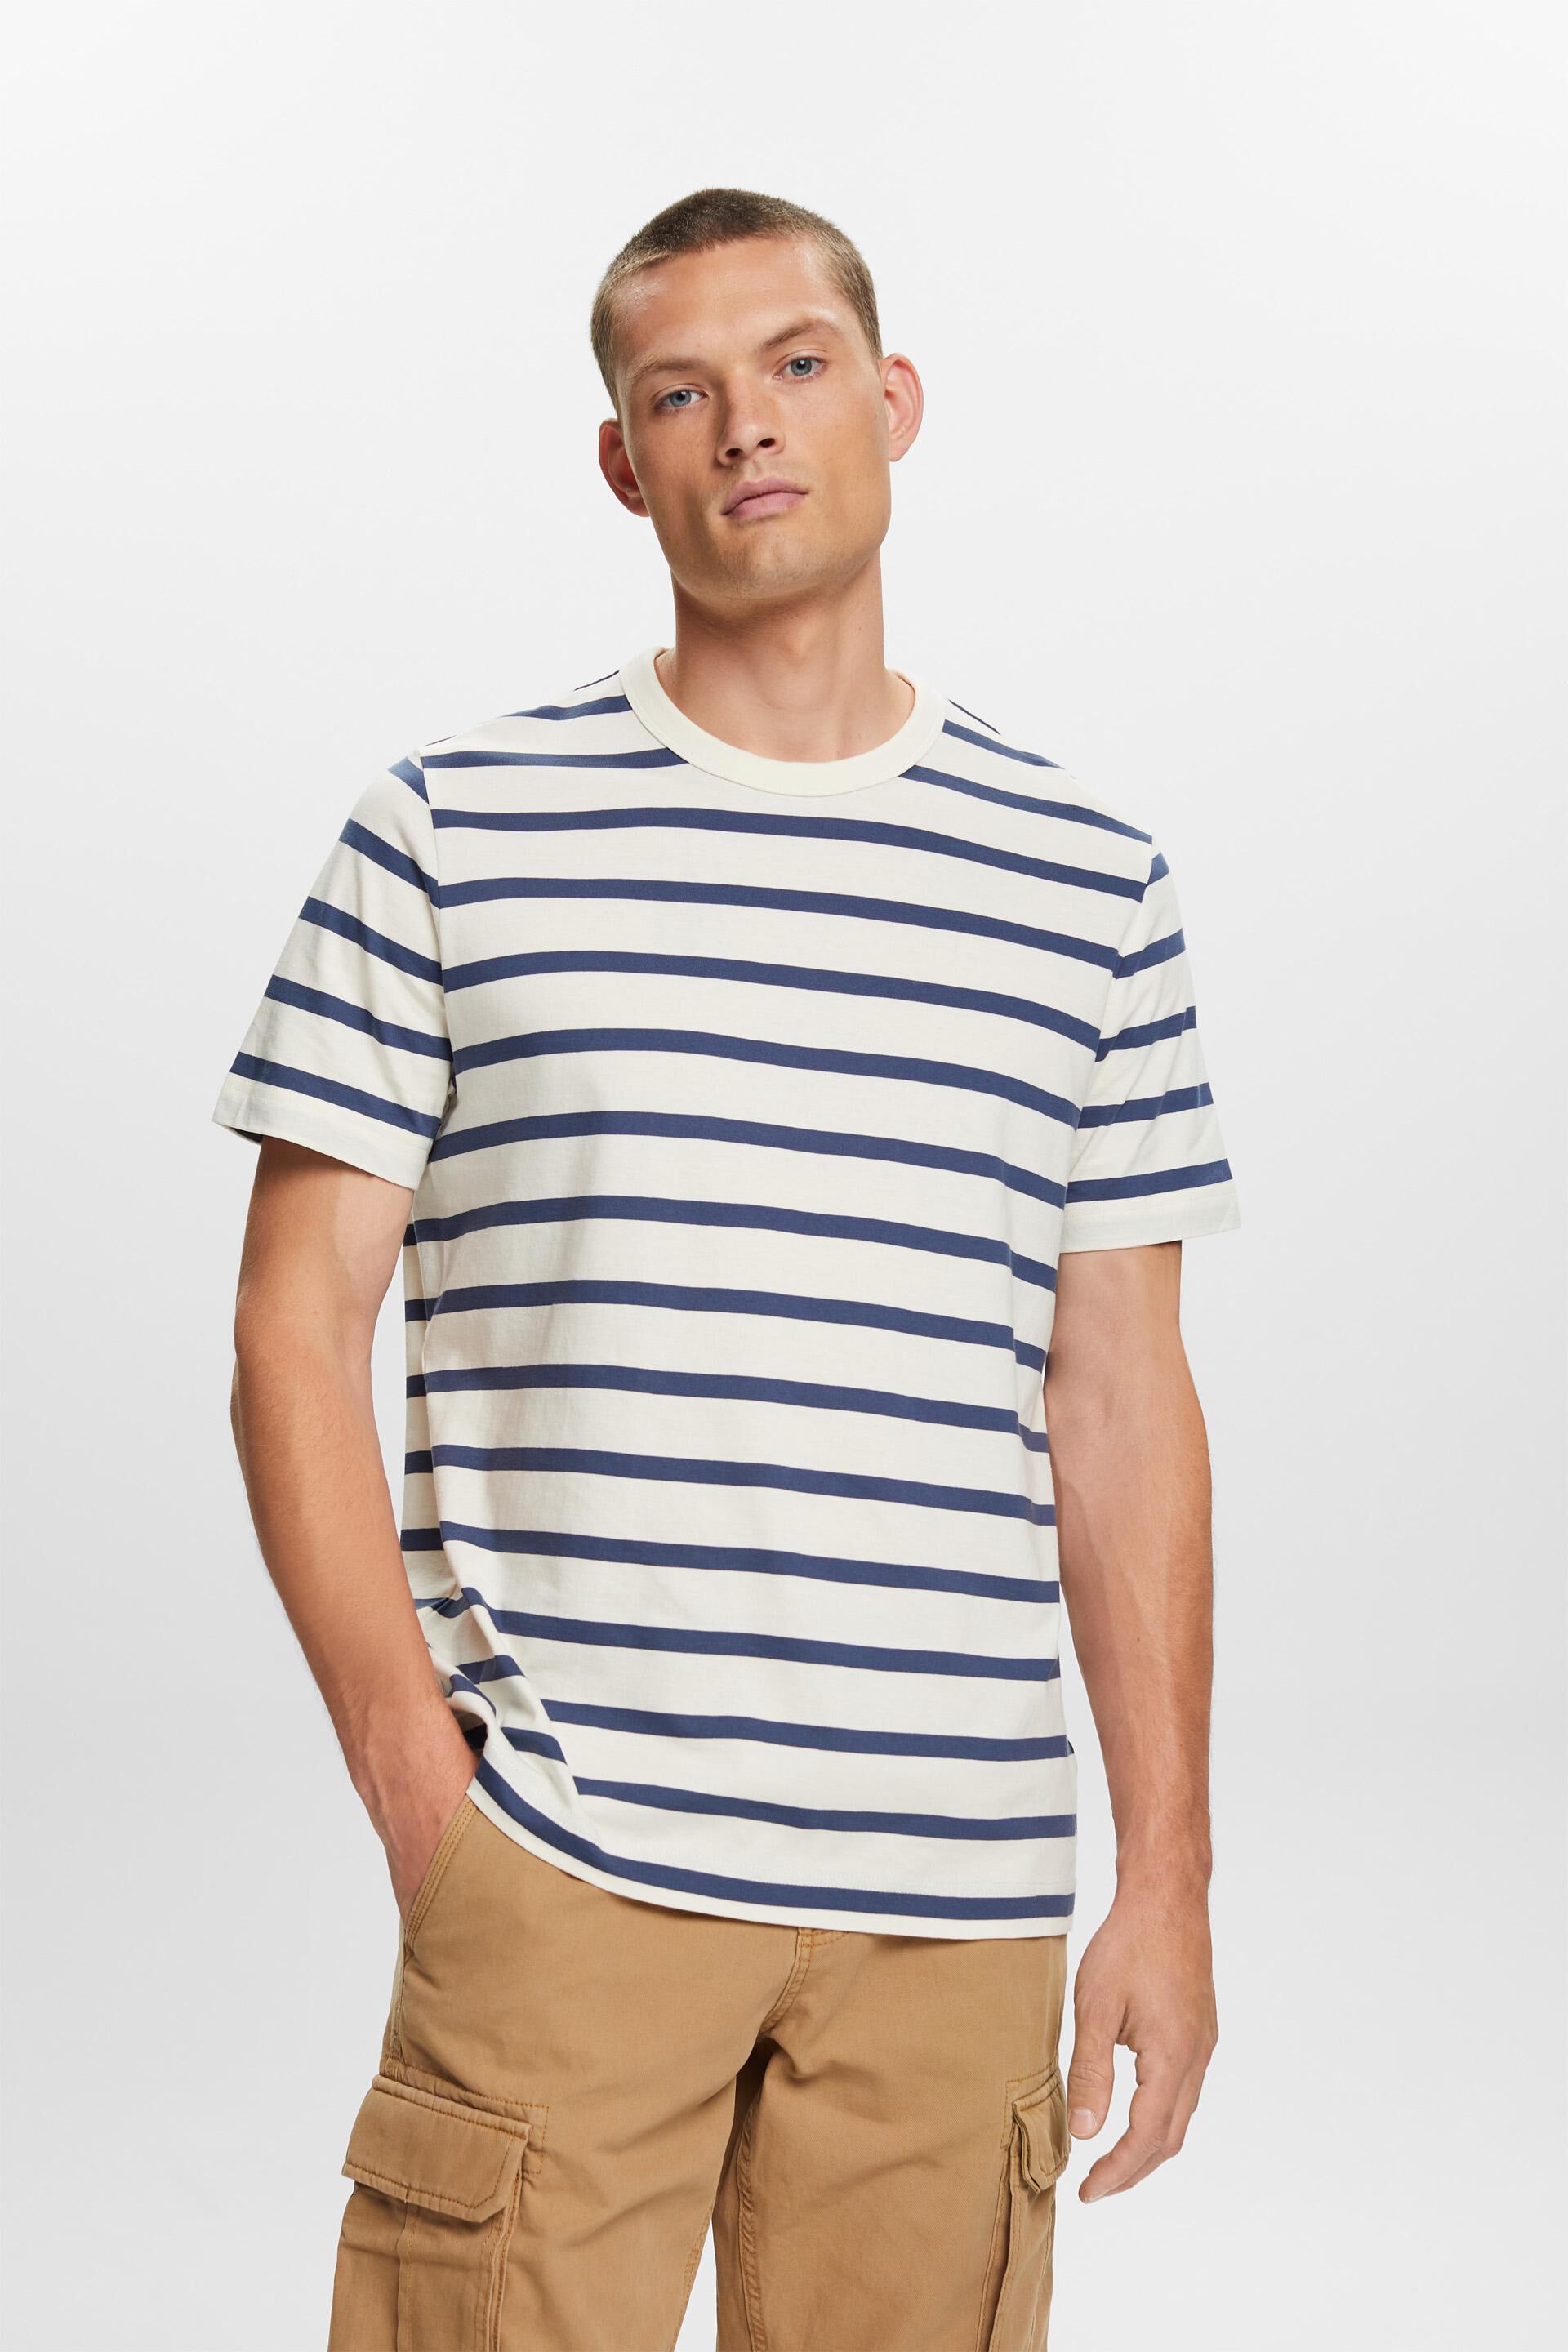 Esprit 100% t-shirt, Striped cotton jersey